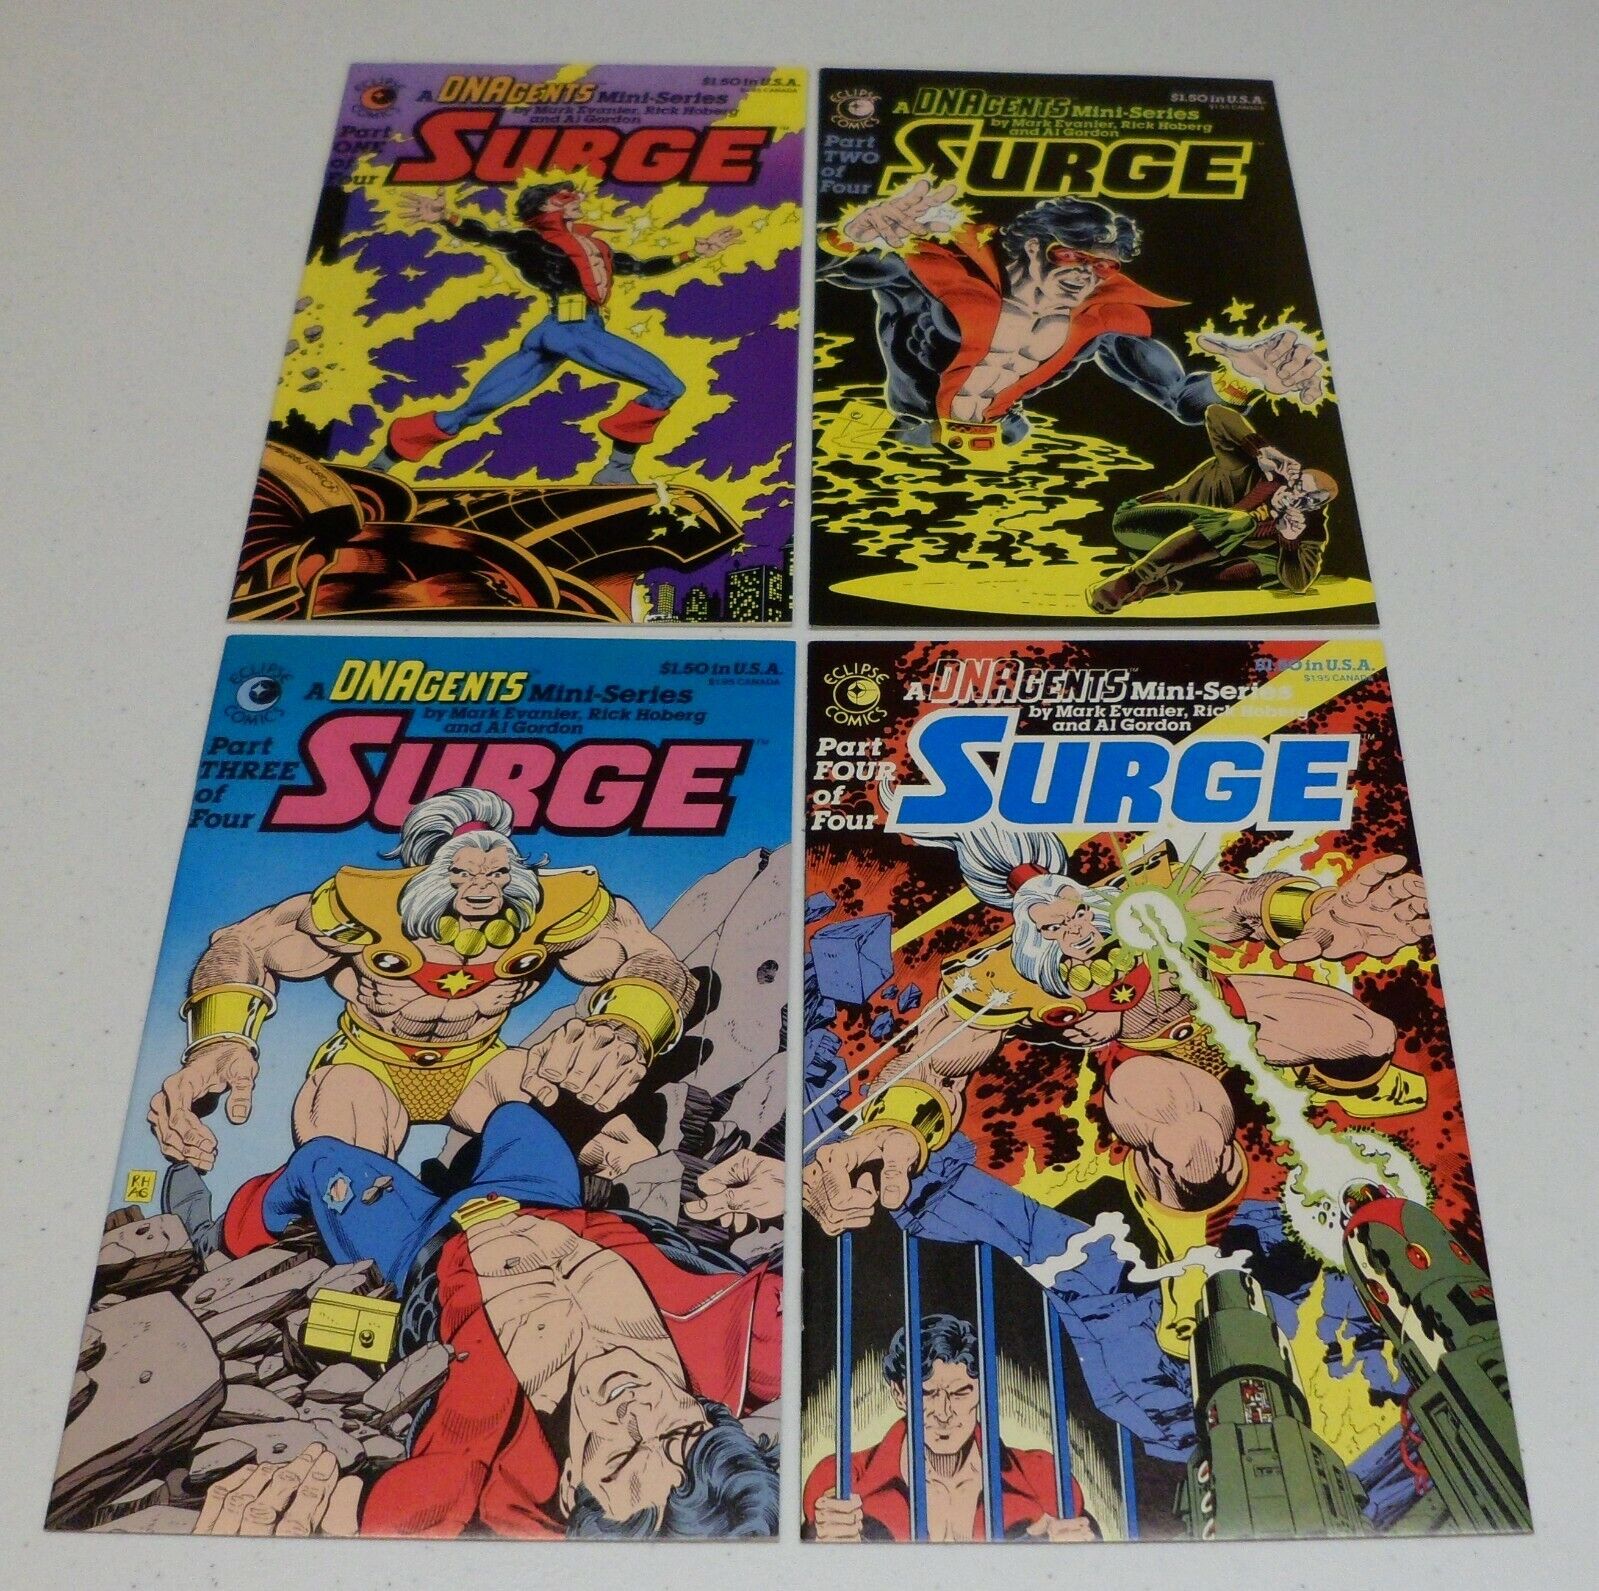 Surge #1 #2 #3 & #4 complete DNAgents mini-series - lot of 4 Eclipse Comics 1984